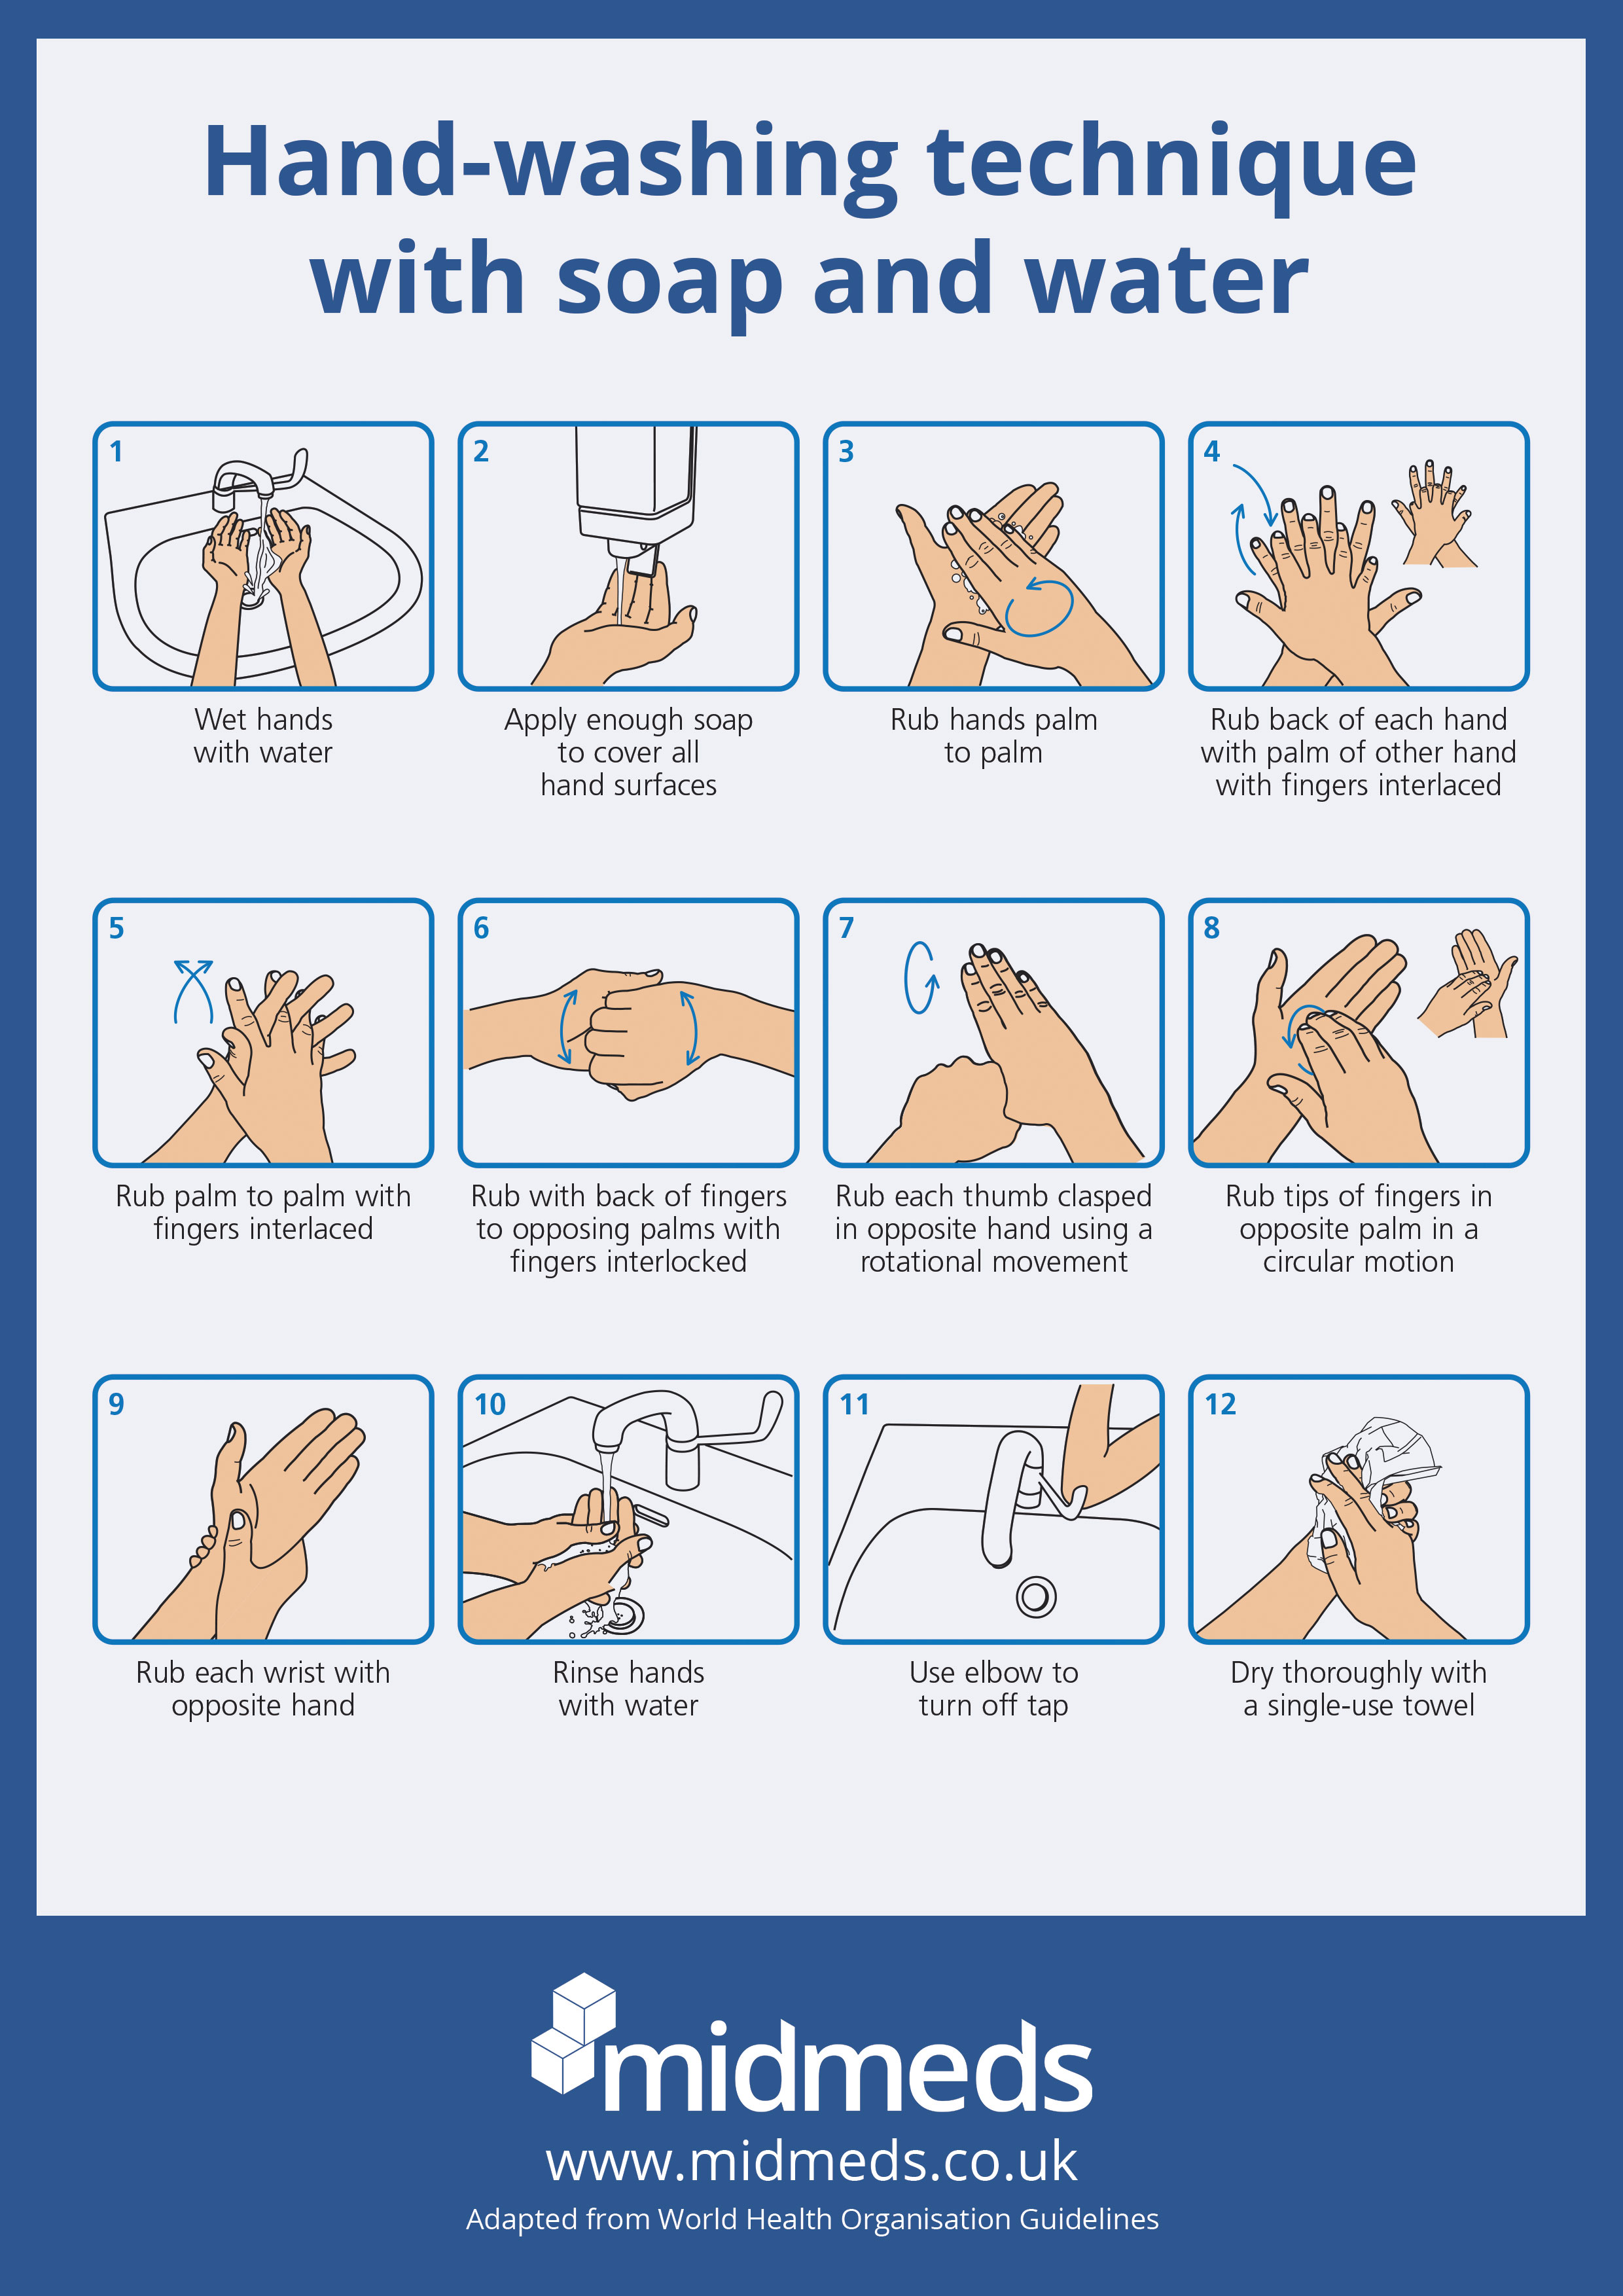 Hand Washing Protocol Sign